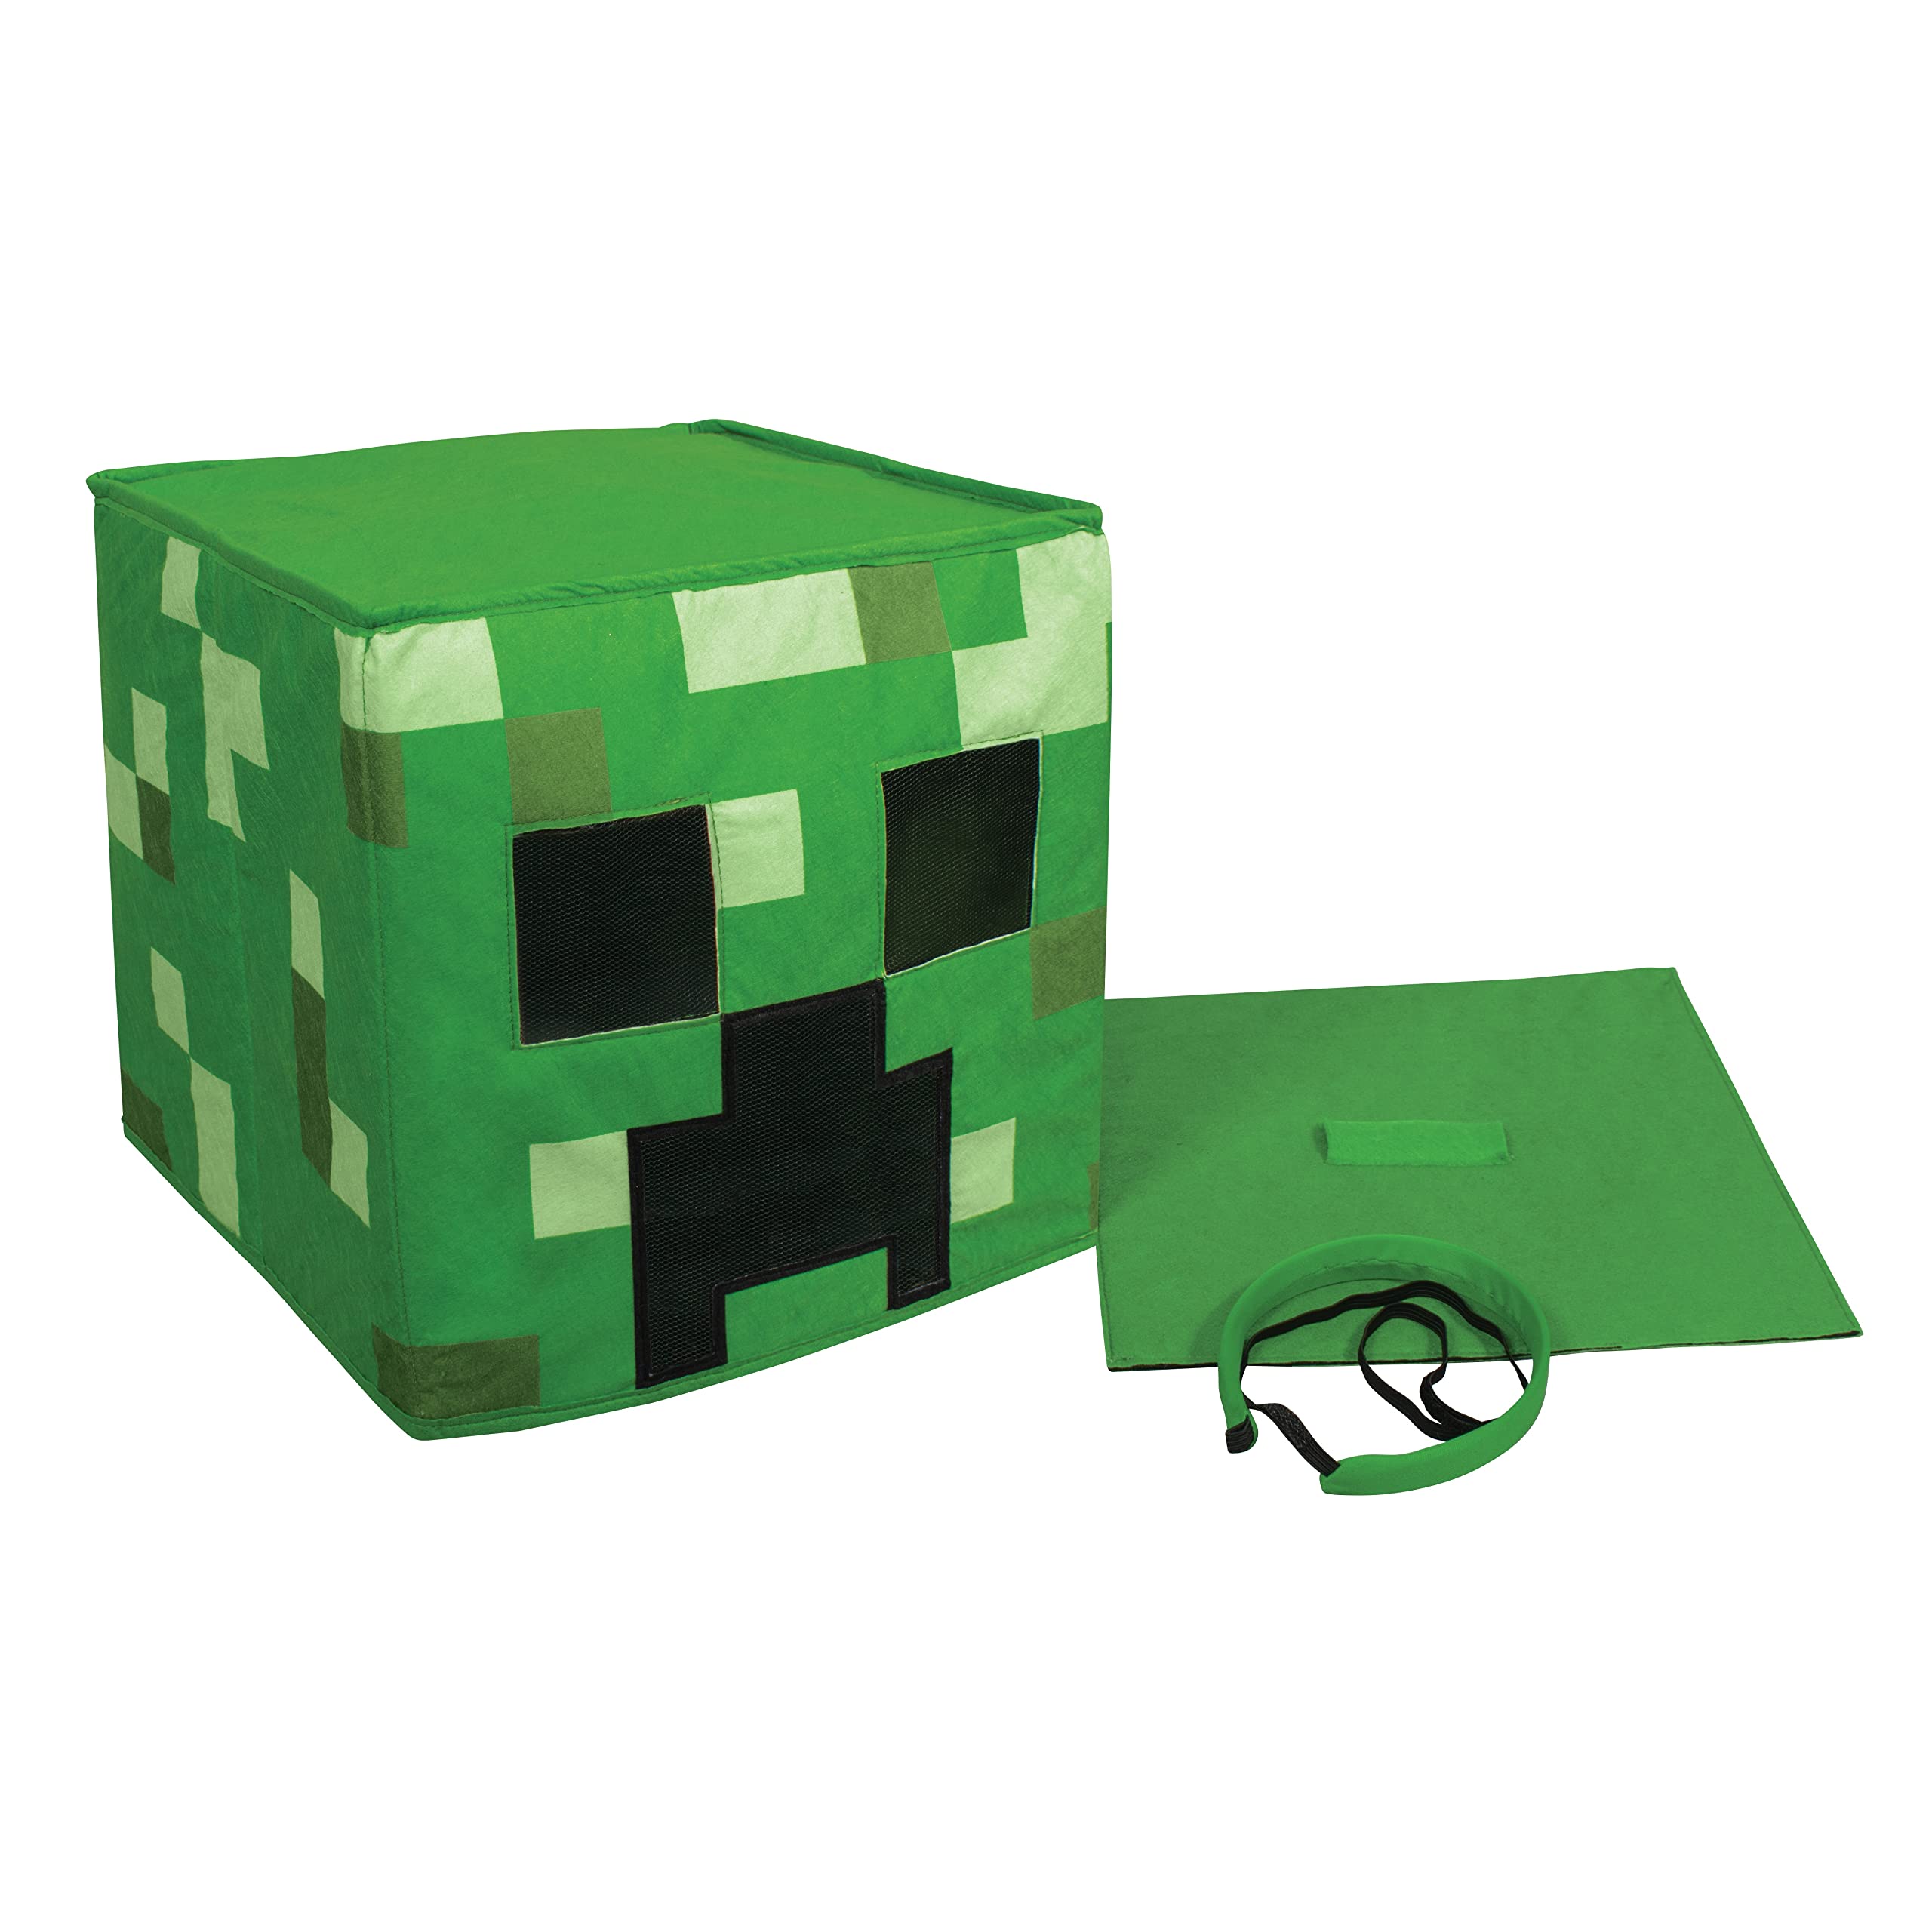 Minecraft Block Head Costume Headpiece, Official Minecraft Costume Accessories, Single Size Costume Mask